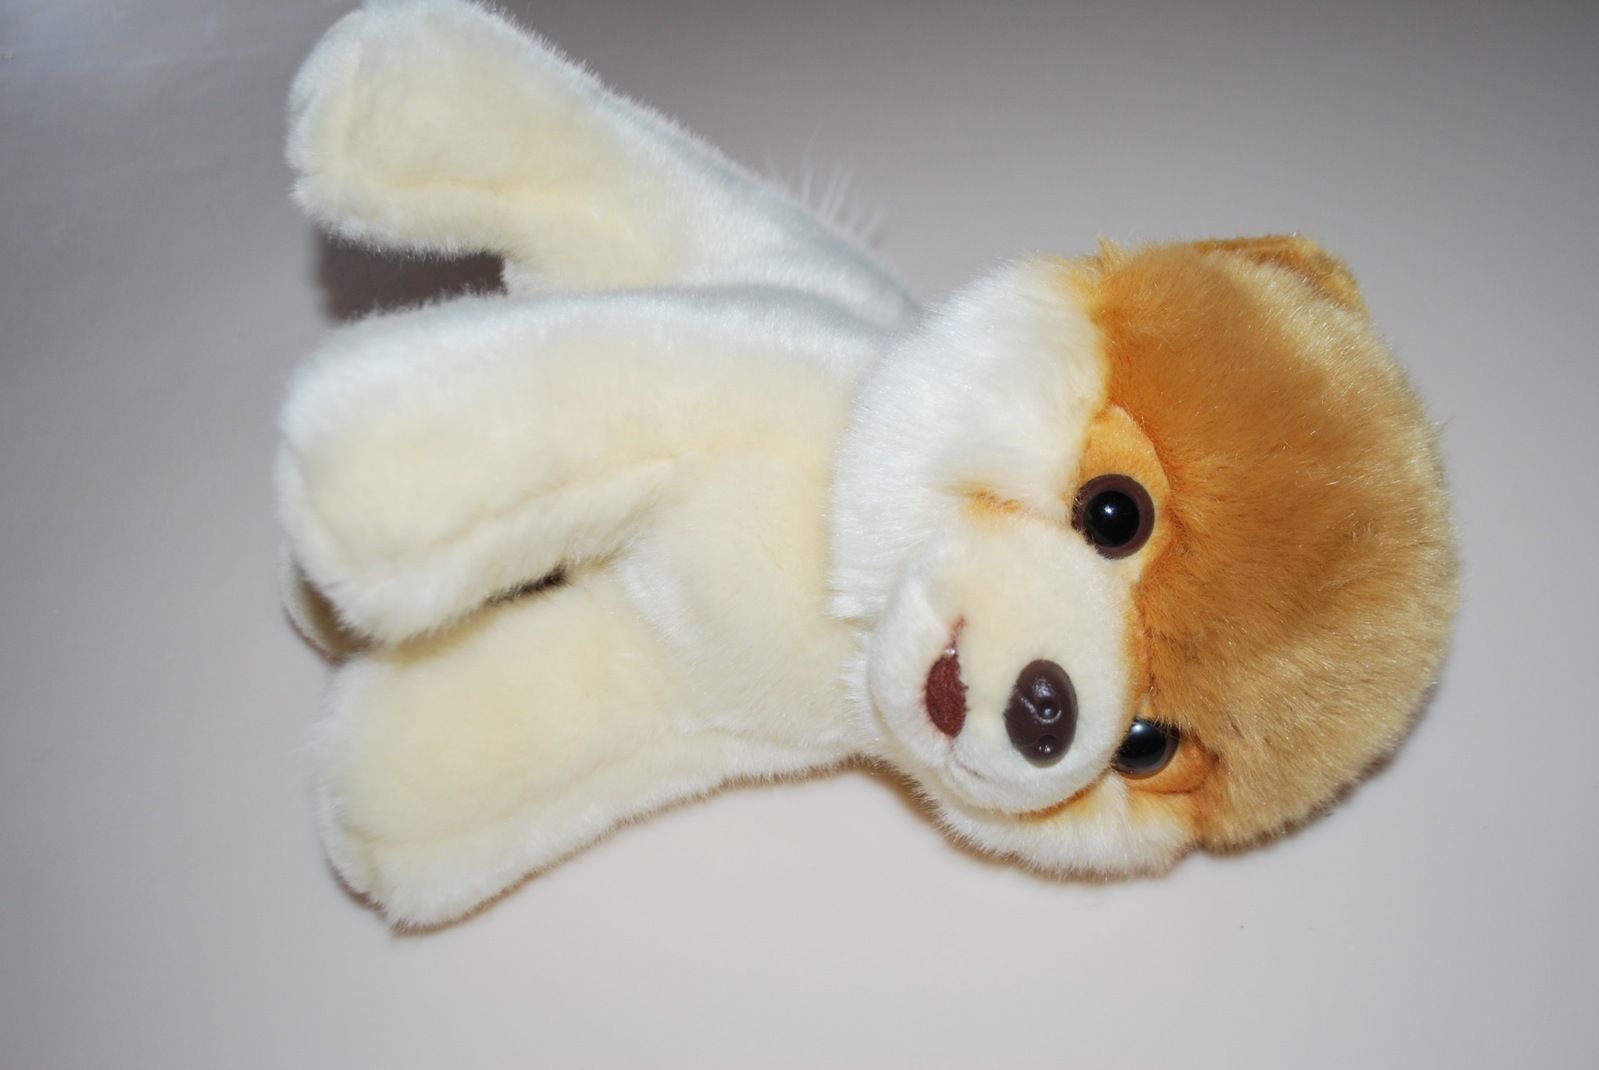 Boo The World's Cutest Dog by Gund Stuffed Animal Plush